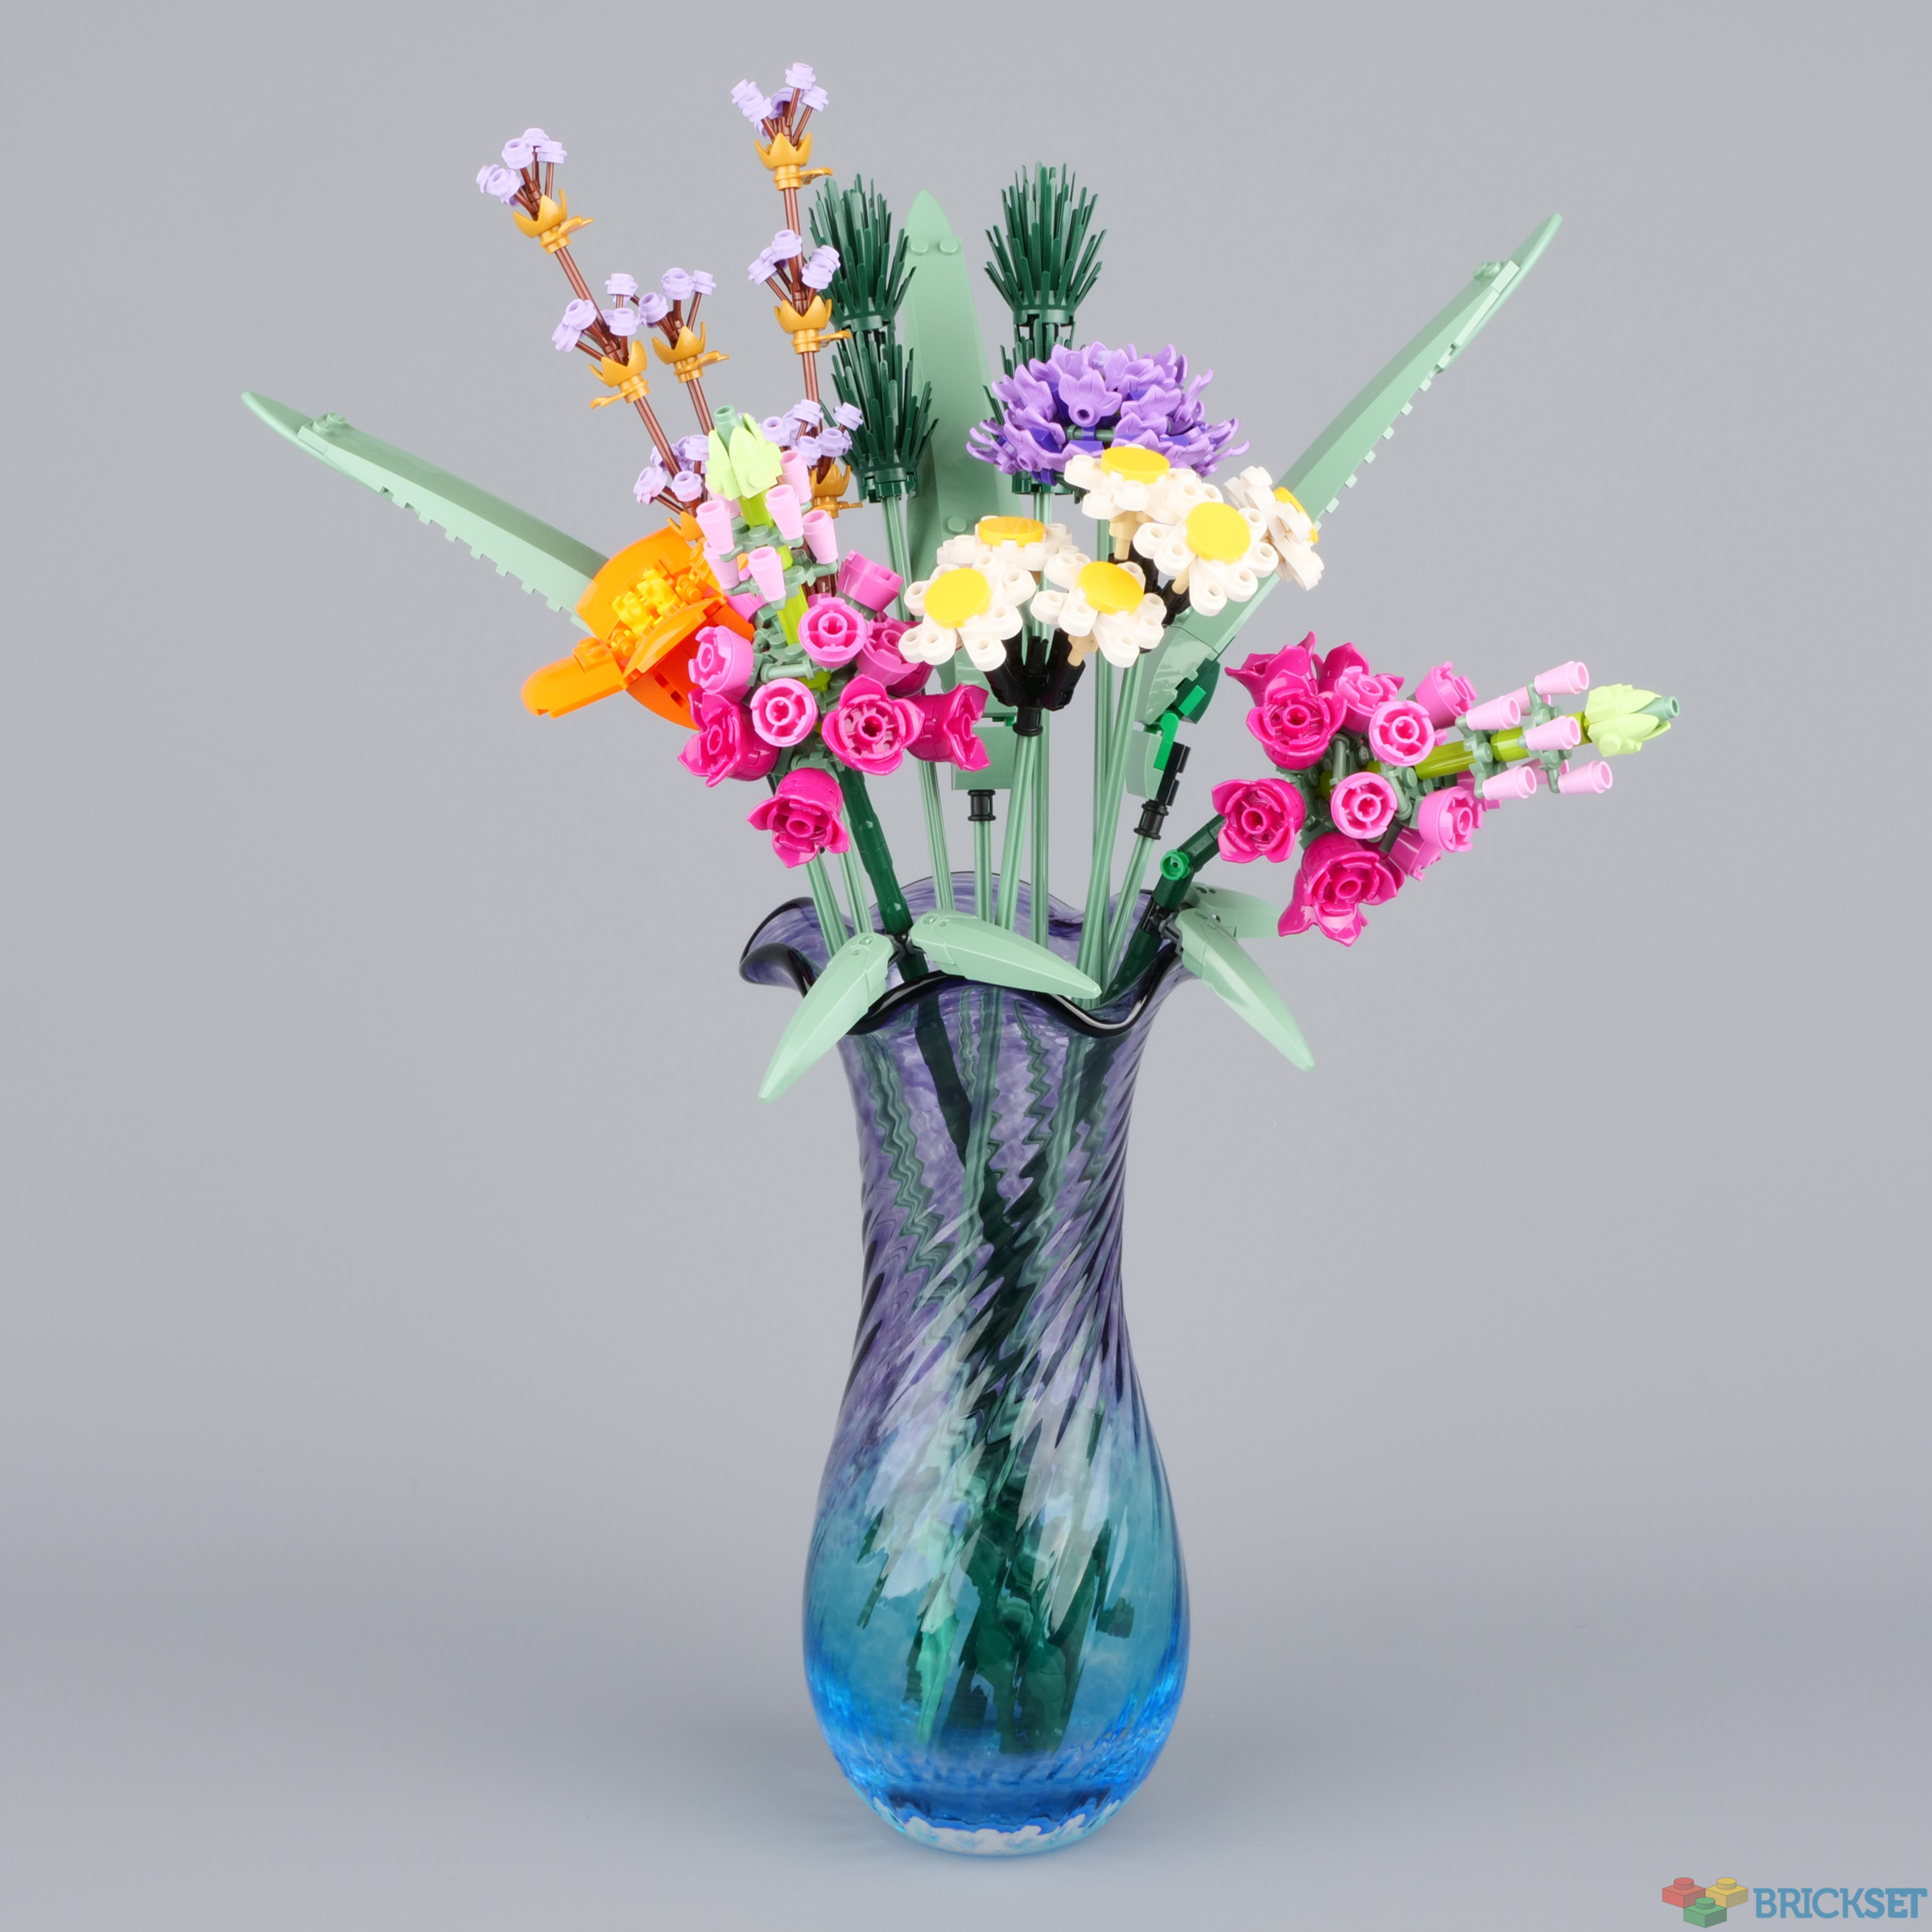 LEGO 10280 Flower Bouquet review | Brickset